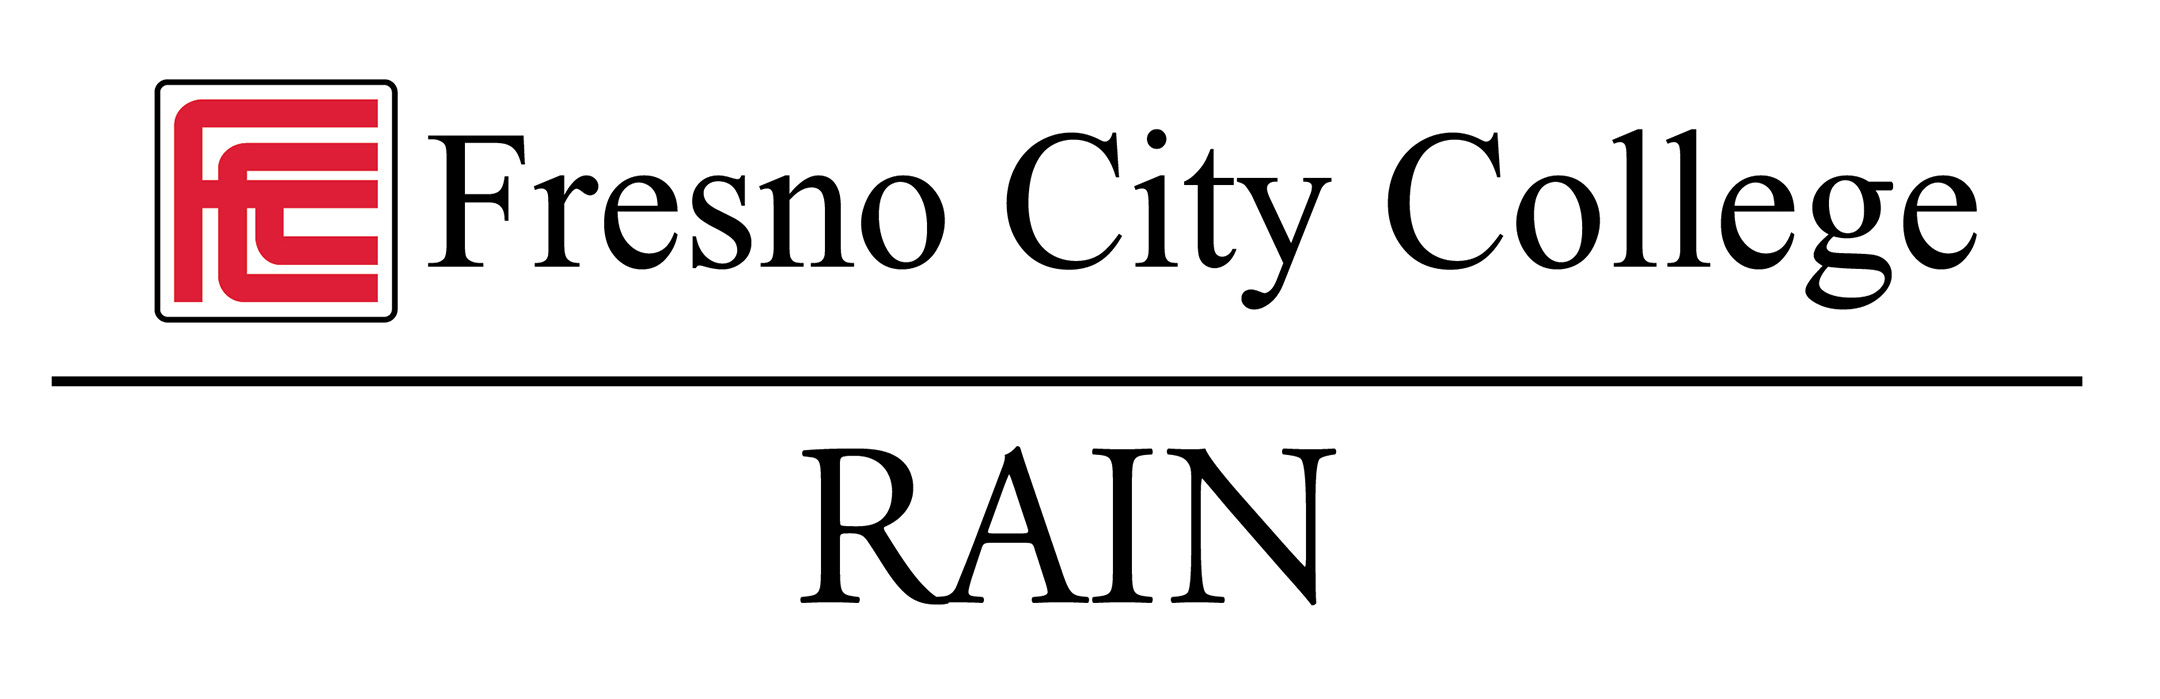 Fresno City College RAIN Program Graphic